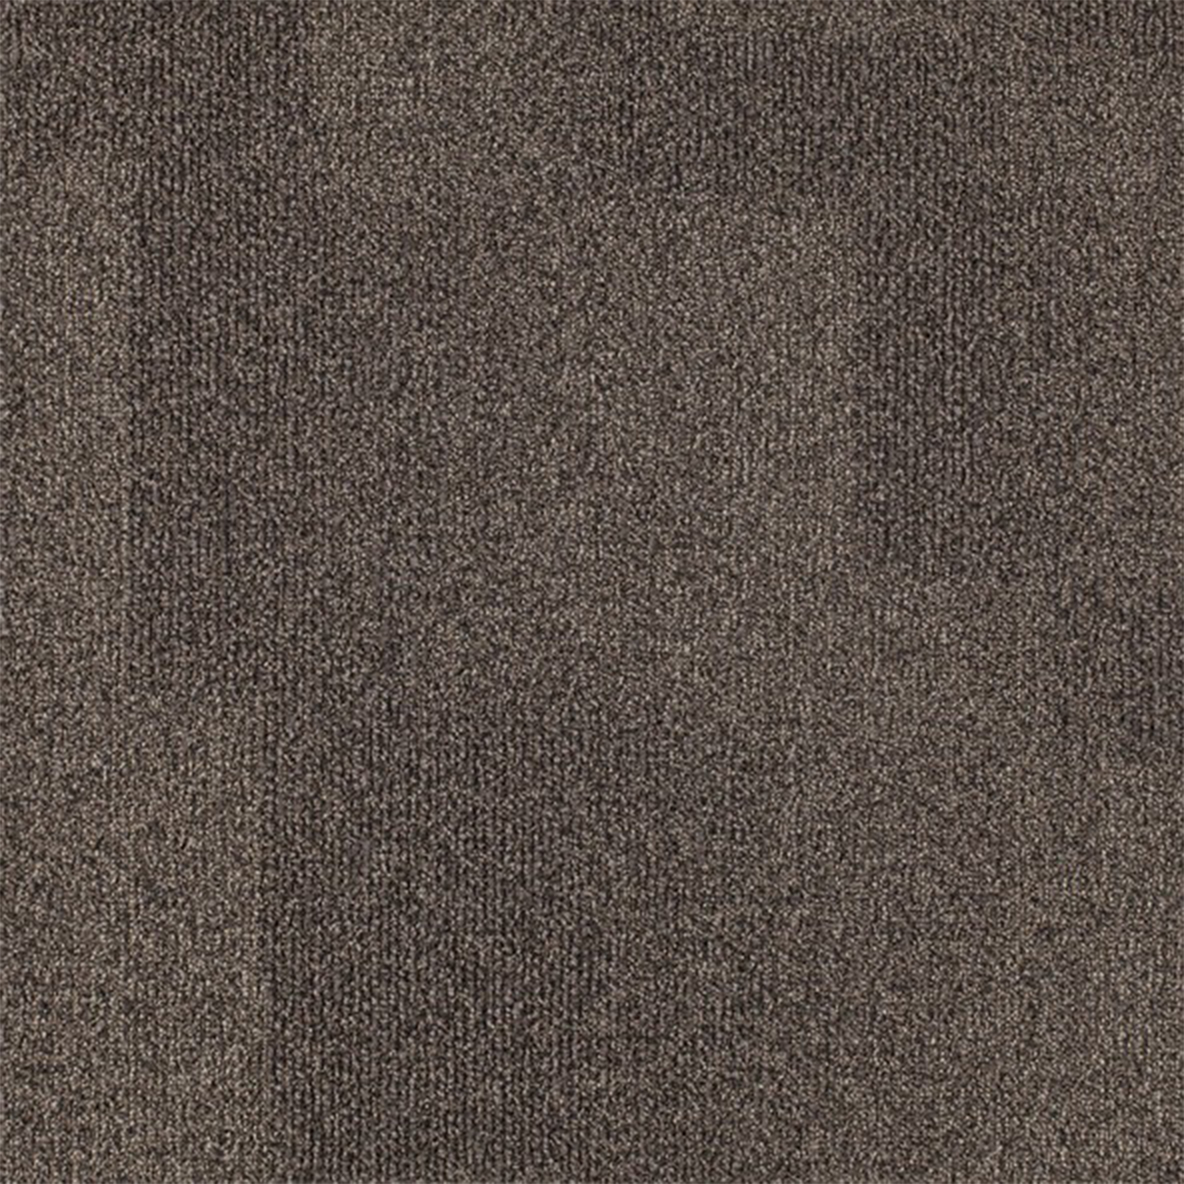 Replicate Commercial Carpet Tile .31 Inch x 50x50 cm per Tile Umber color close up